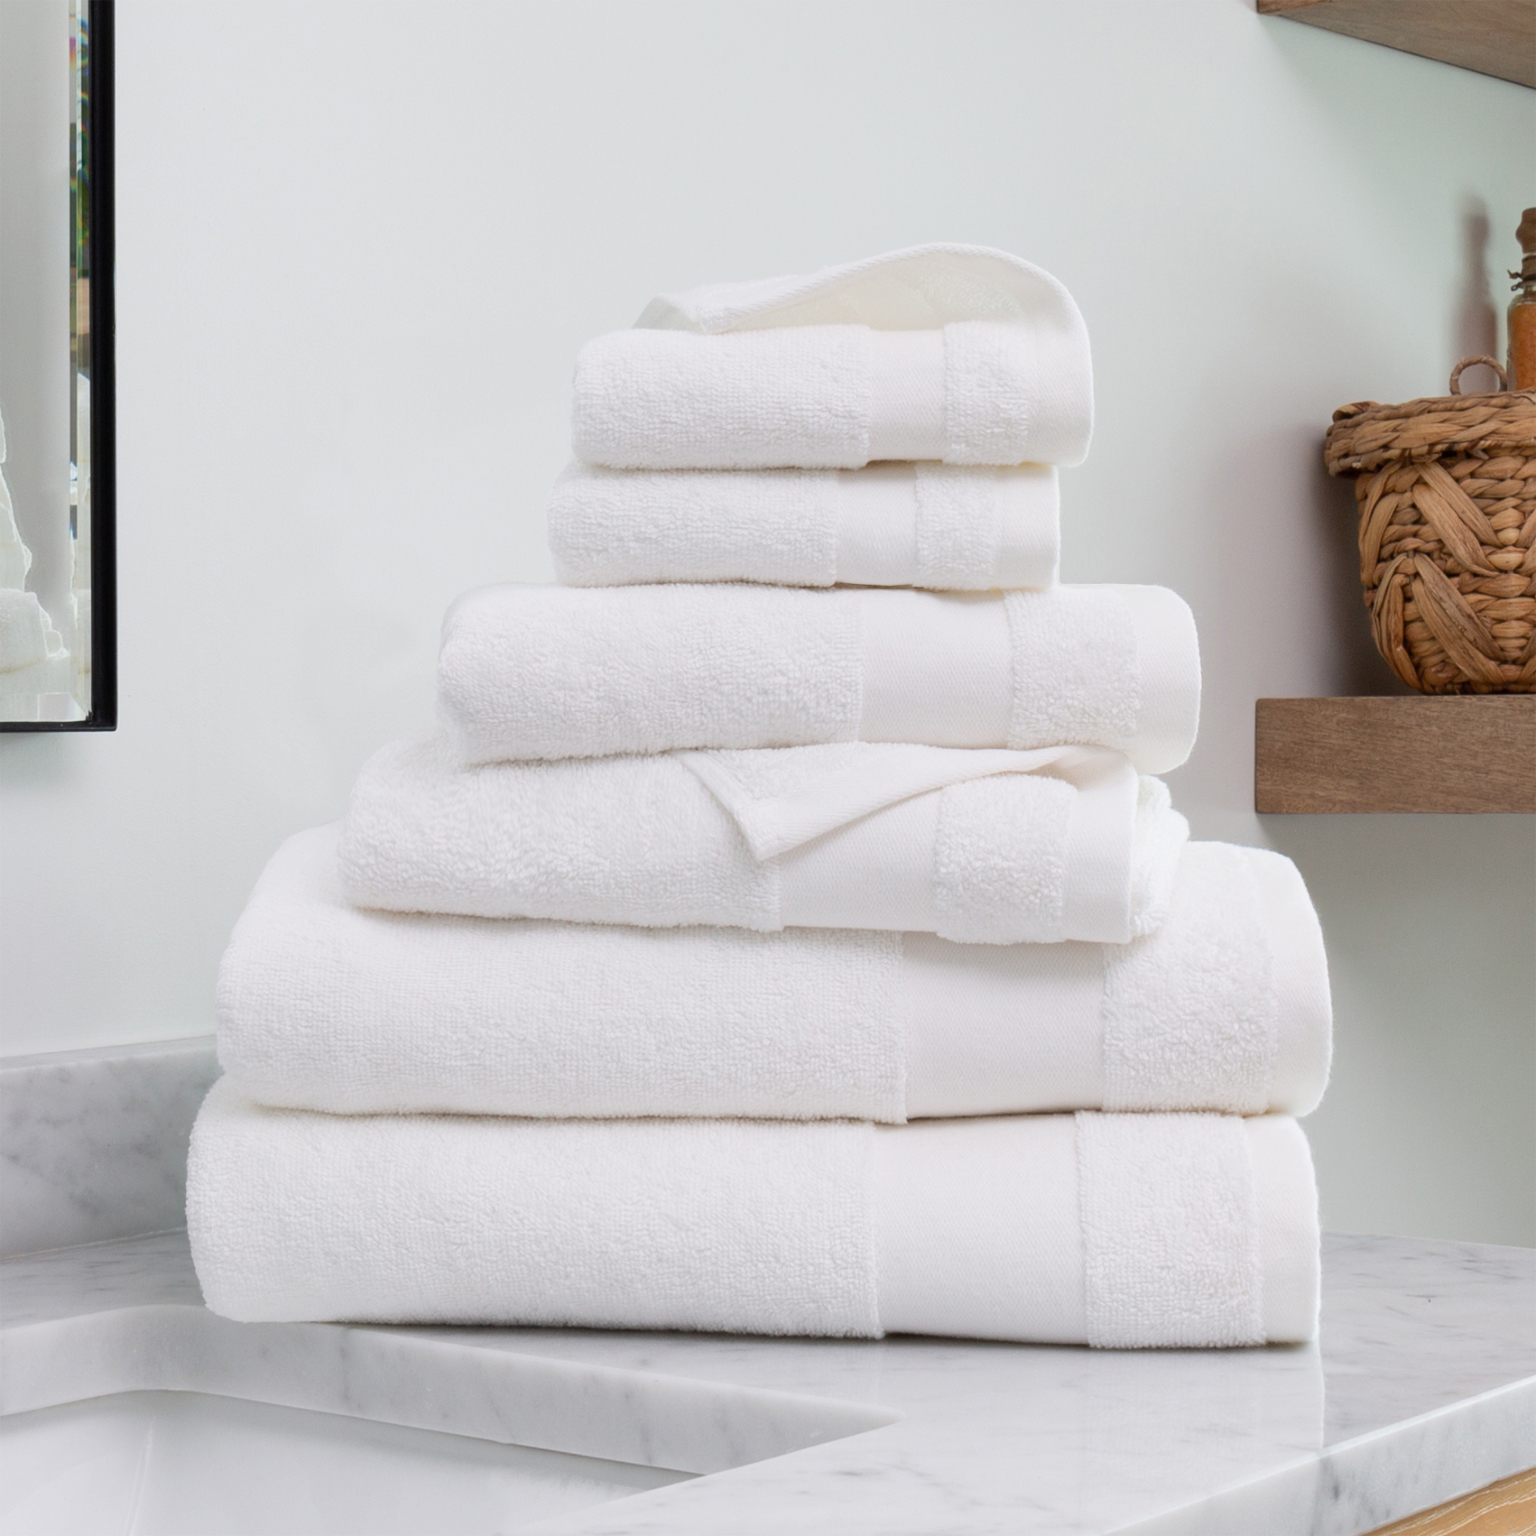 100% Cotton White Diamond Bath Towels (4-Pack) - The Clean Store